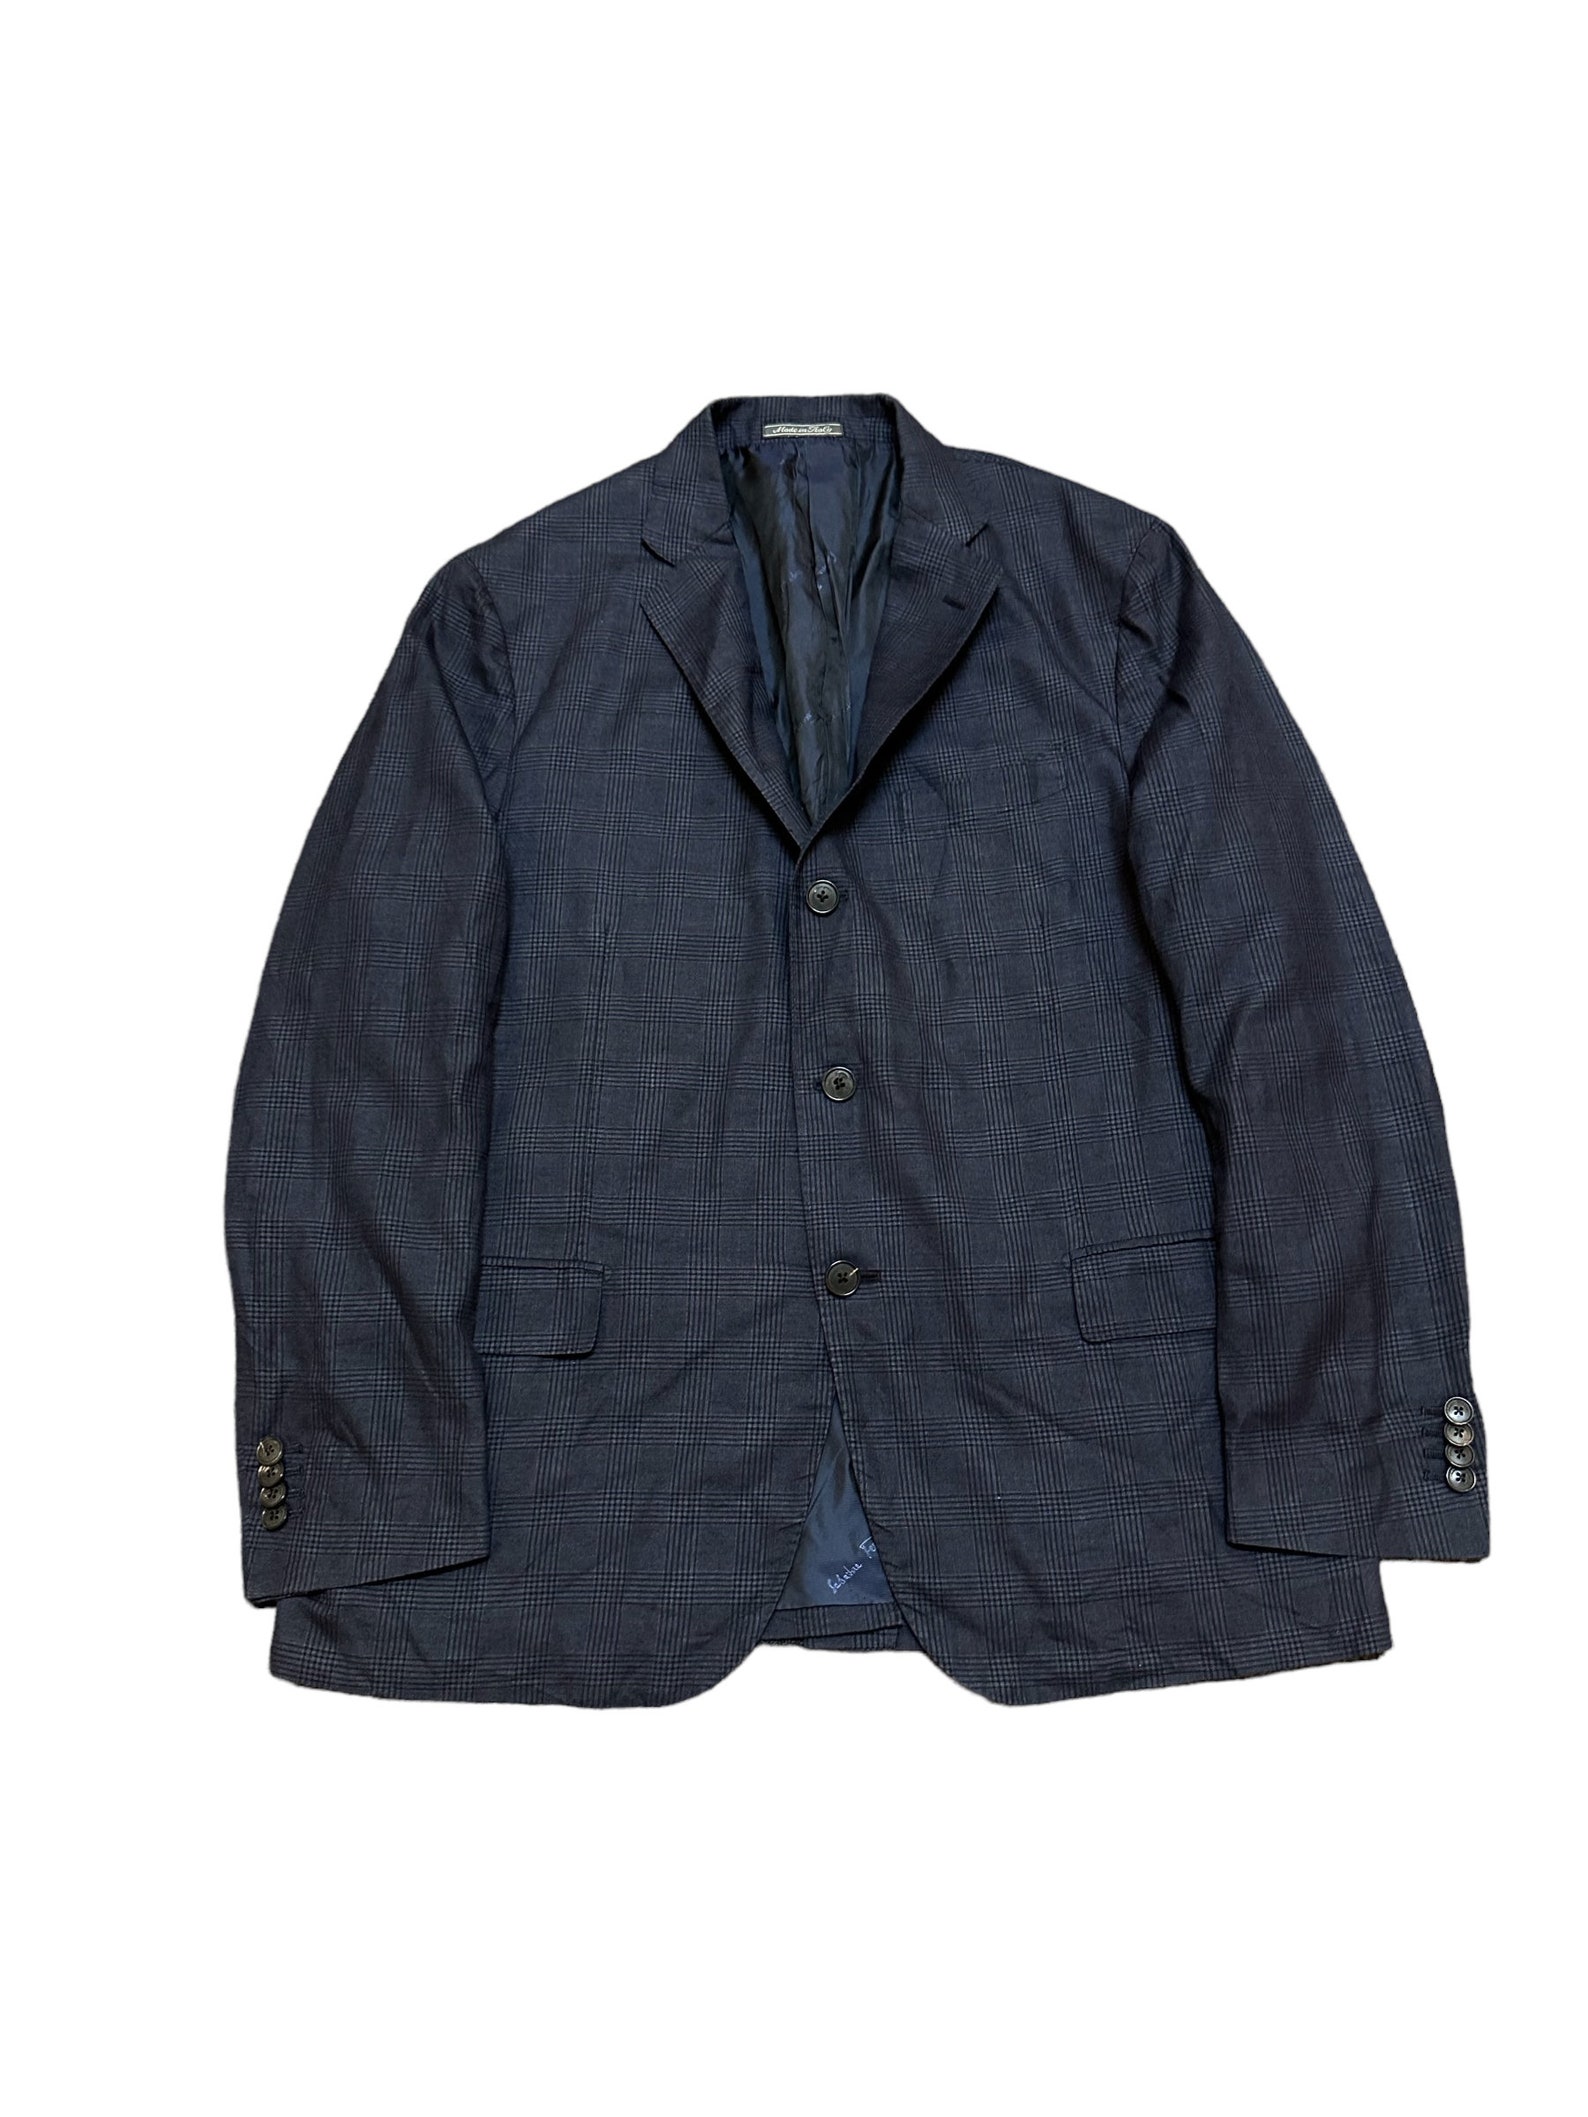 Vintage 90s Salvatore Ferragamo Mens Blazzer Jacket Made in Italy High ...